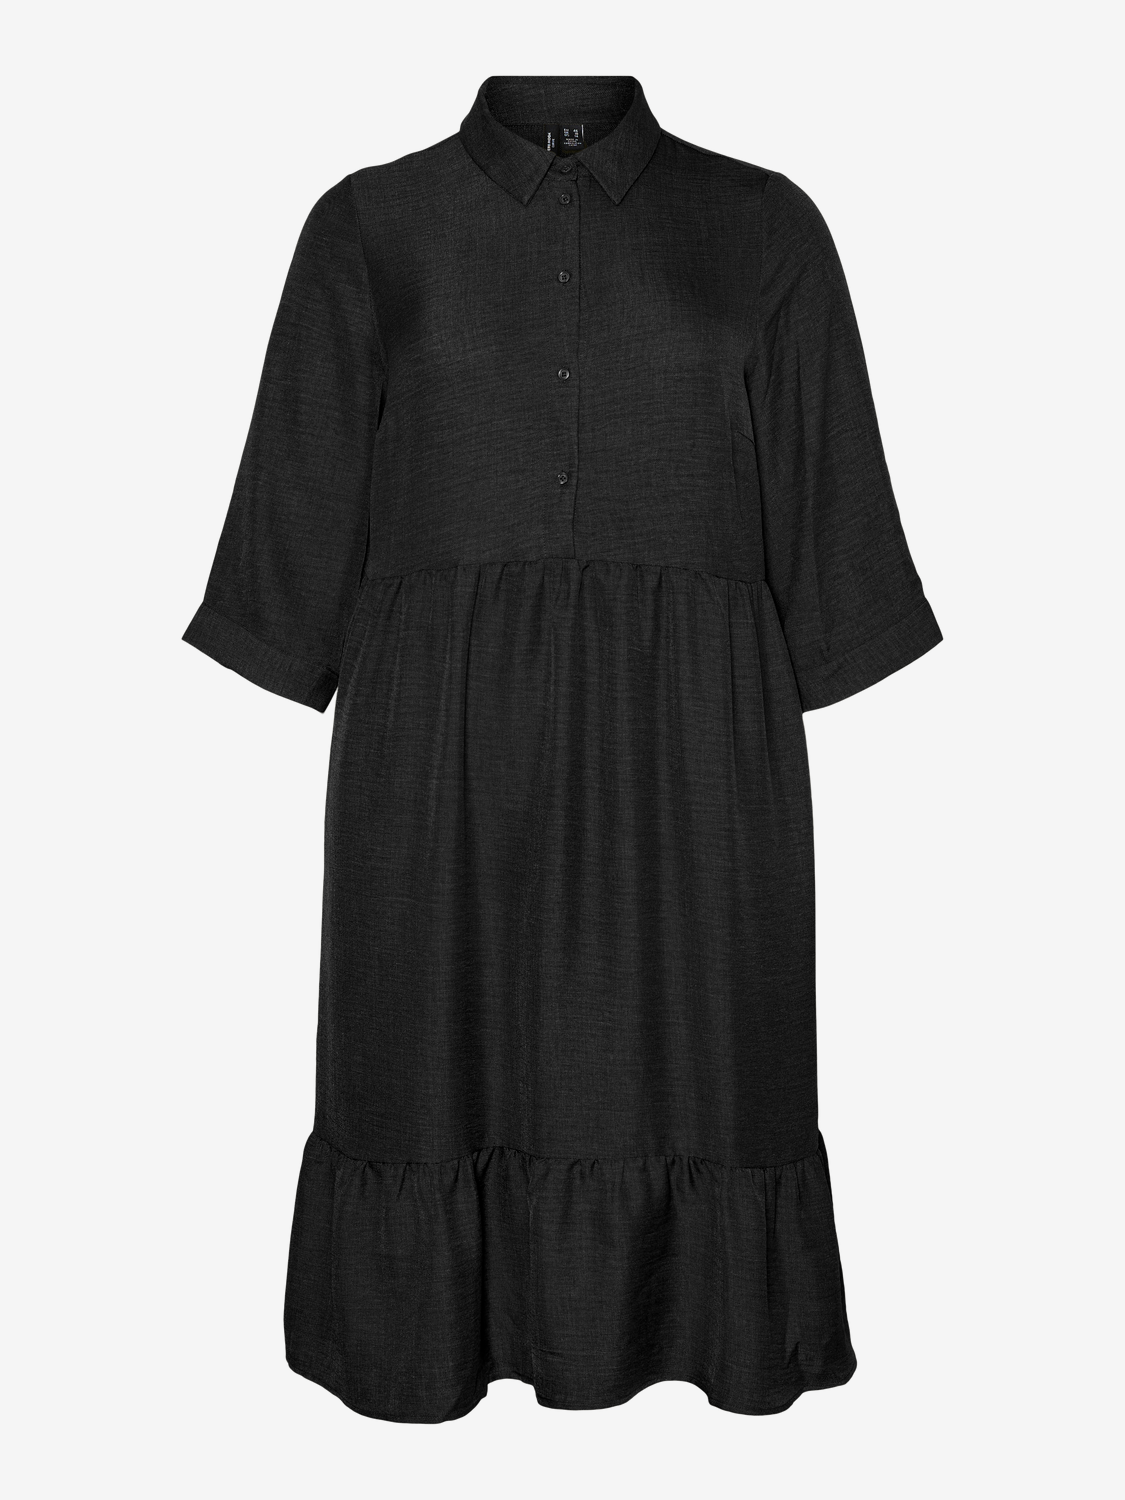 Vero Moda VMCMELONEY Midi dress -Black - 10312985